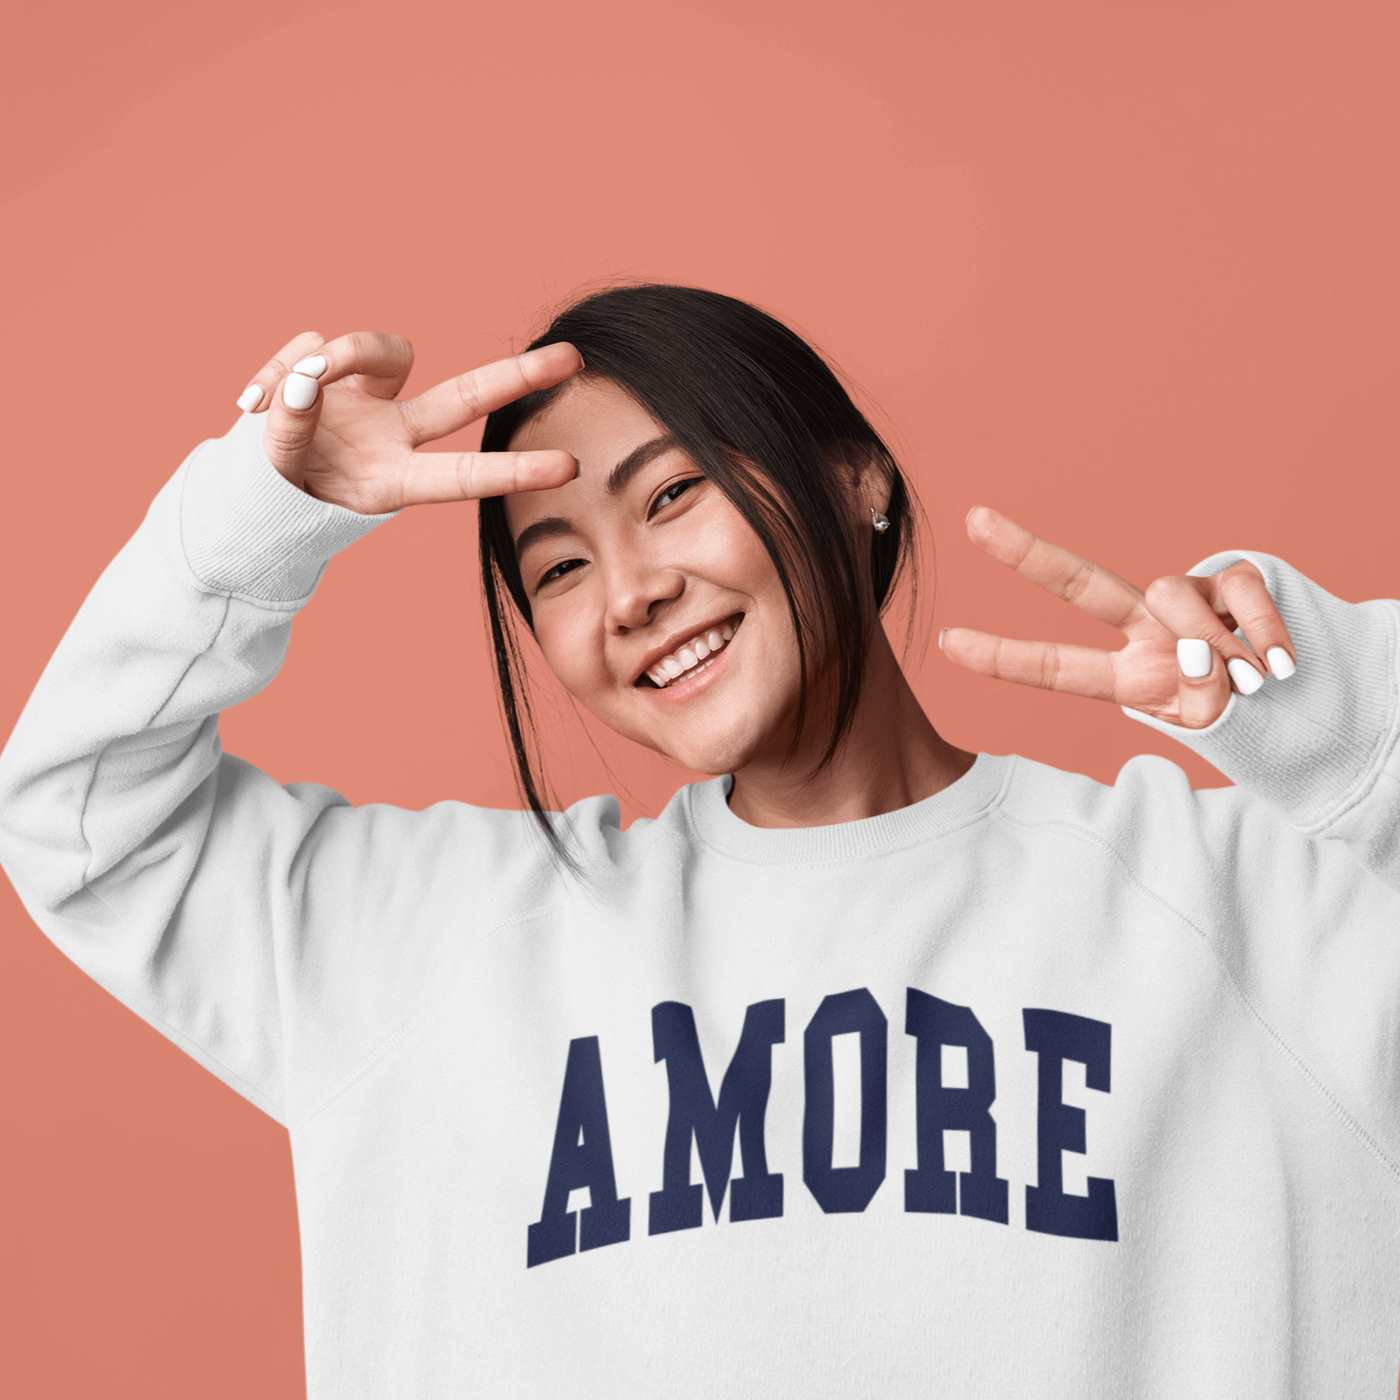 Amore - Organic Sweatshirt - The Refined Spirit